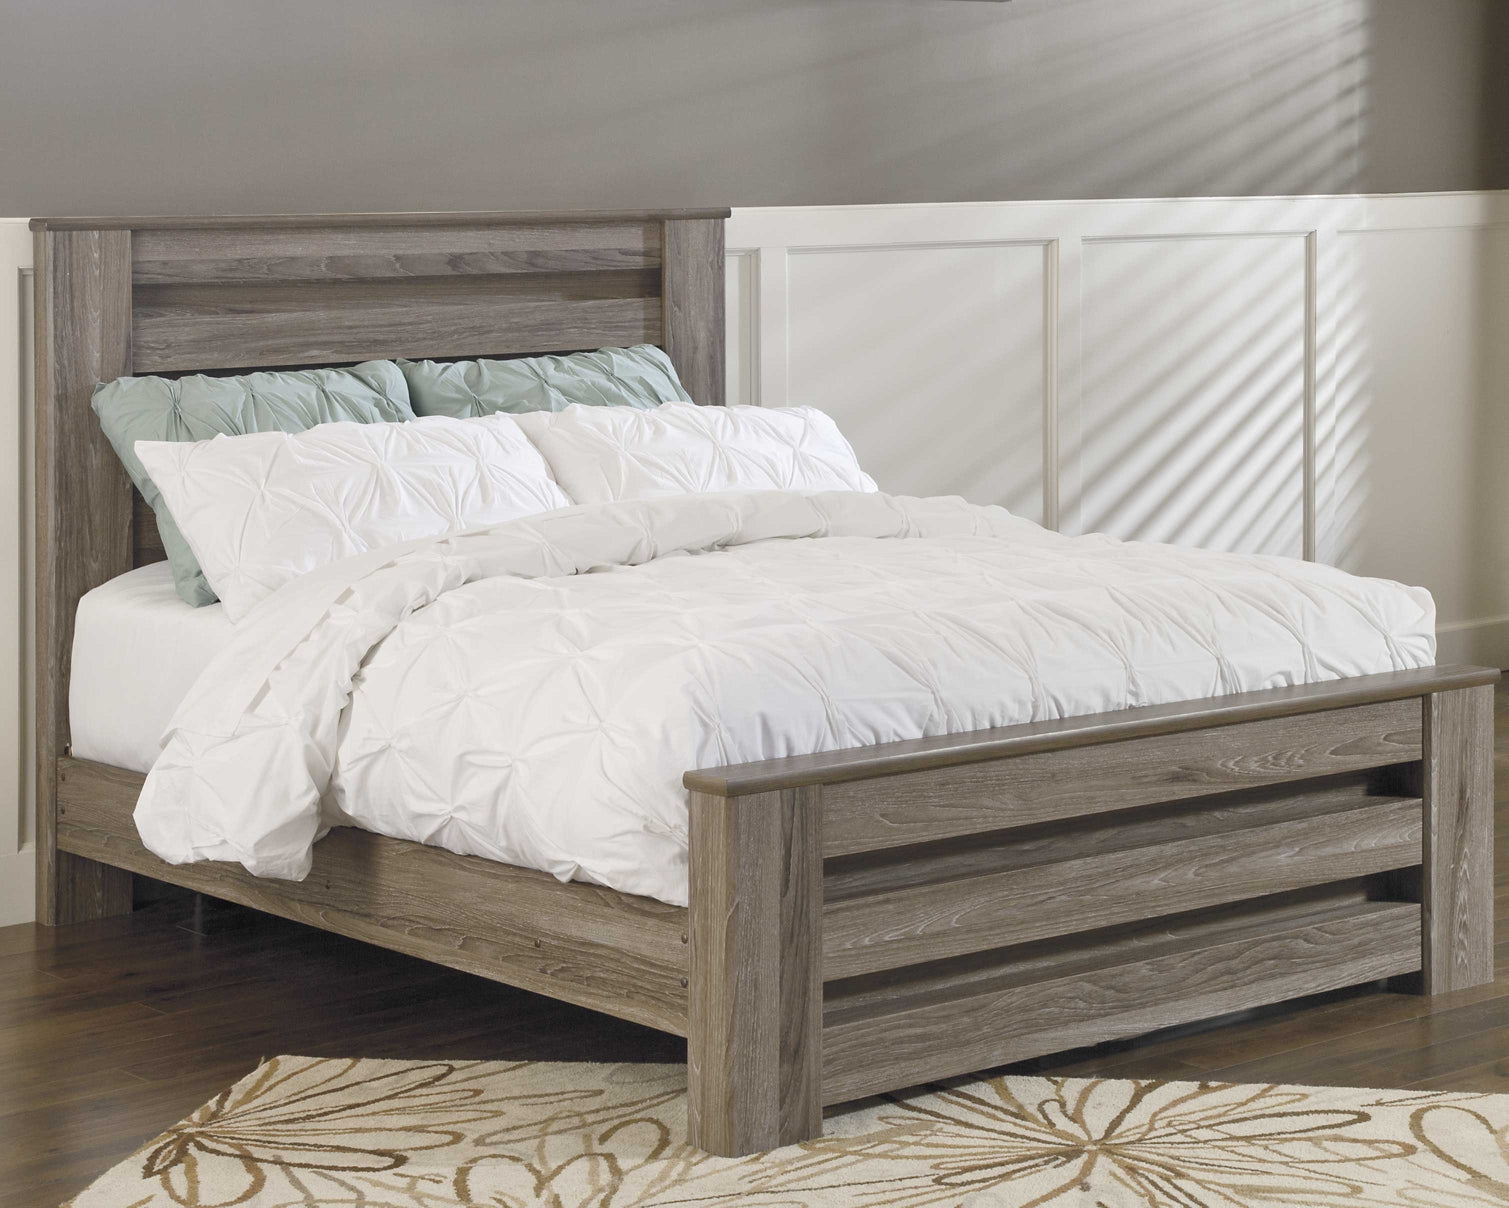 Zelen Queen Panel Bed with Mirrored Dresser and 2 Nightstands at Walker Mattress and Furniture Locations in Cedar Park and Belton TX.